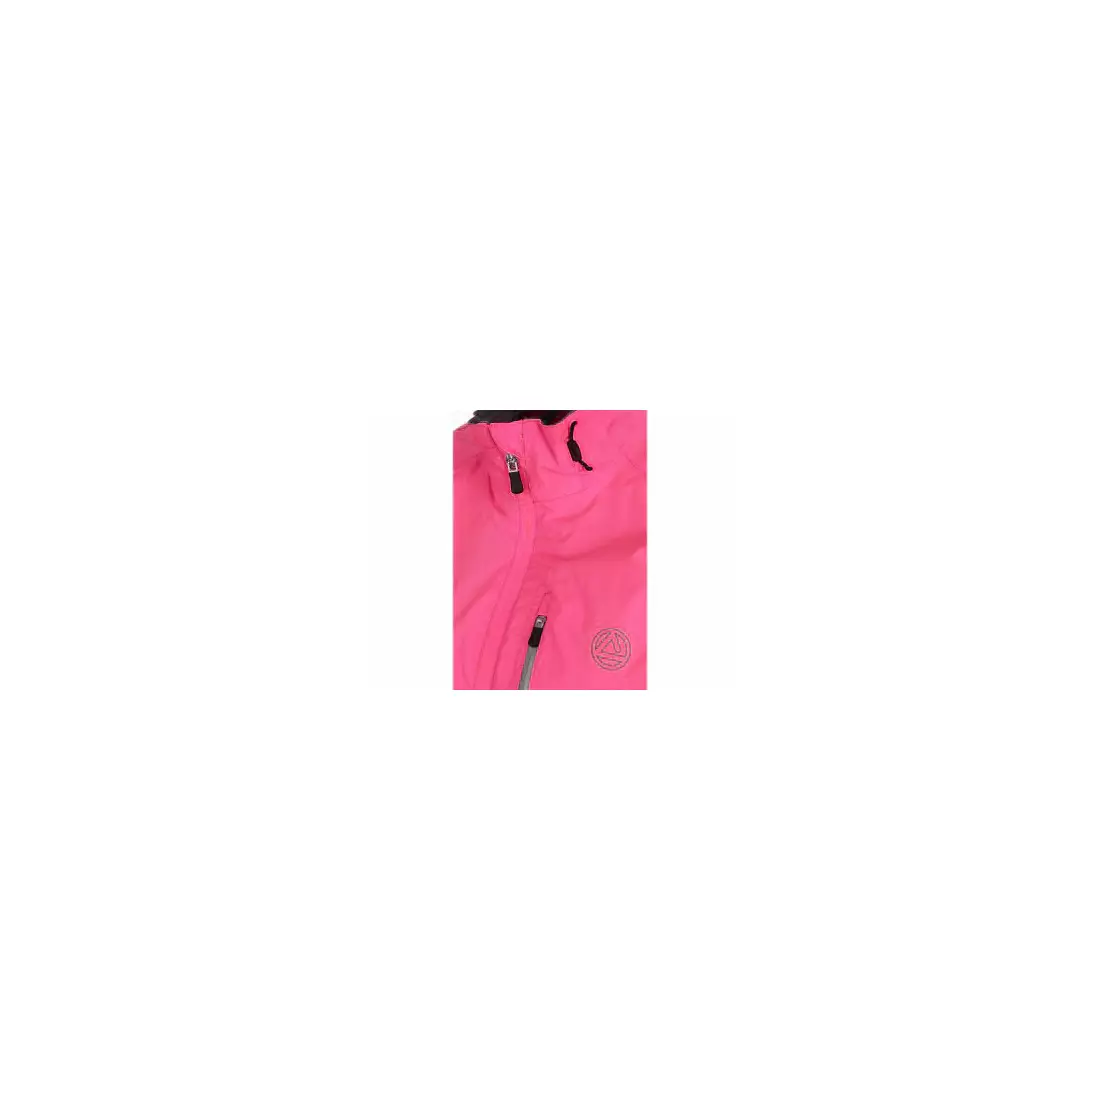 DARE2B Transpose women's cycling rain jacket DWW095-7ZP, color: pink